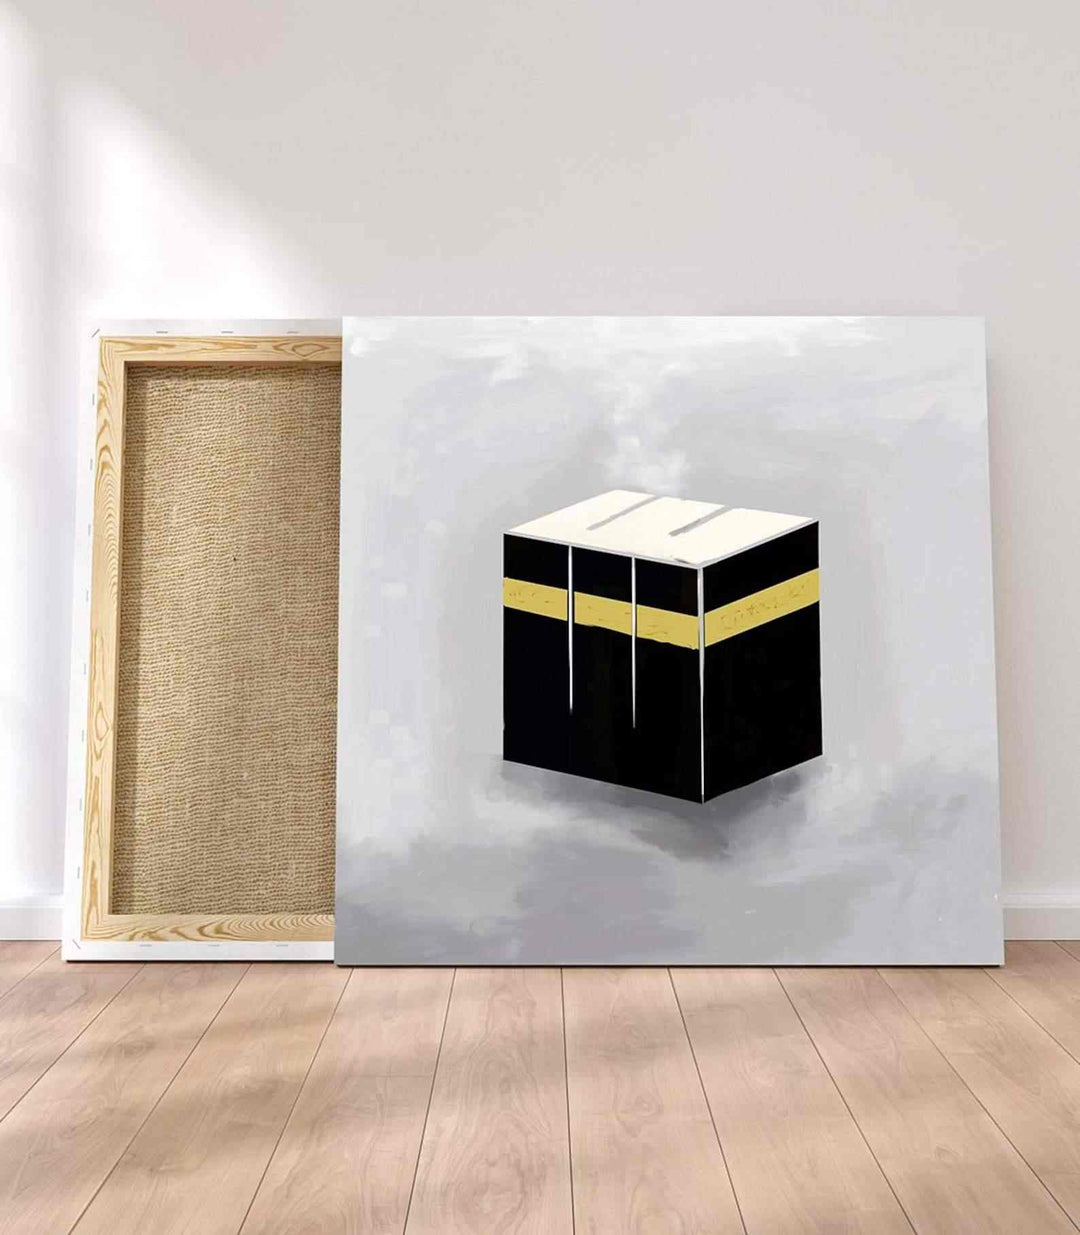 Kaaba v4 Oil Painting Reproduction Canvas Print Islamic Wall Art - Islamic Wall Art Store